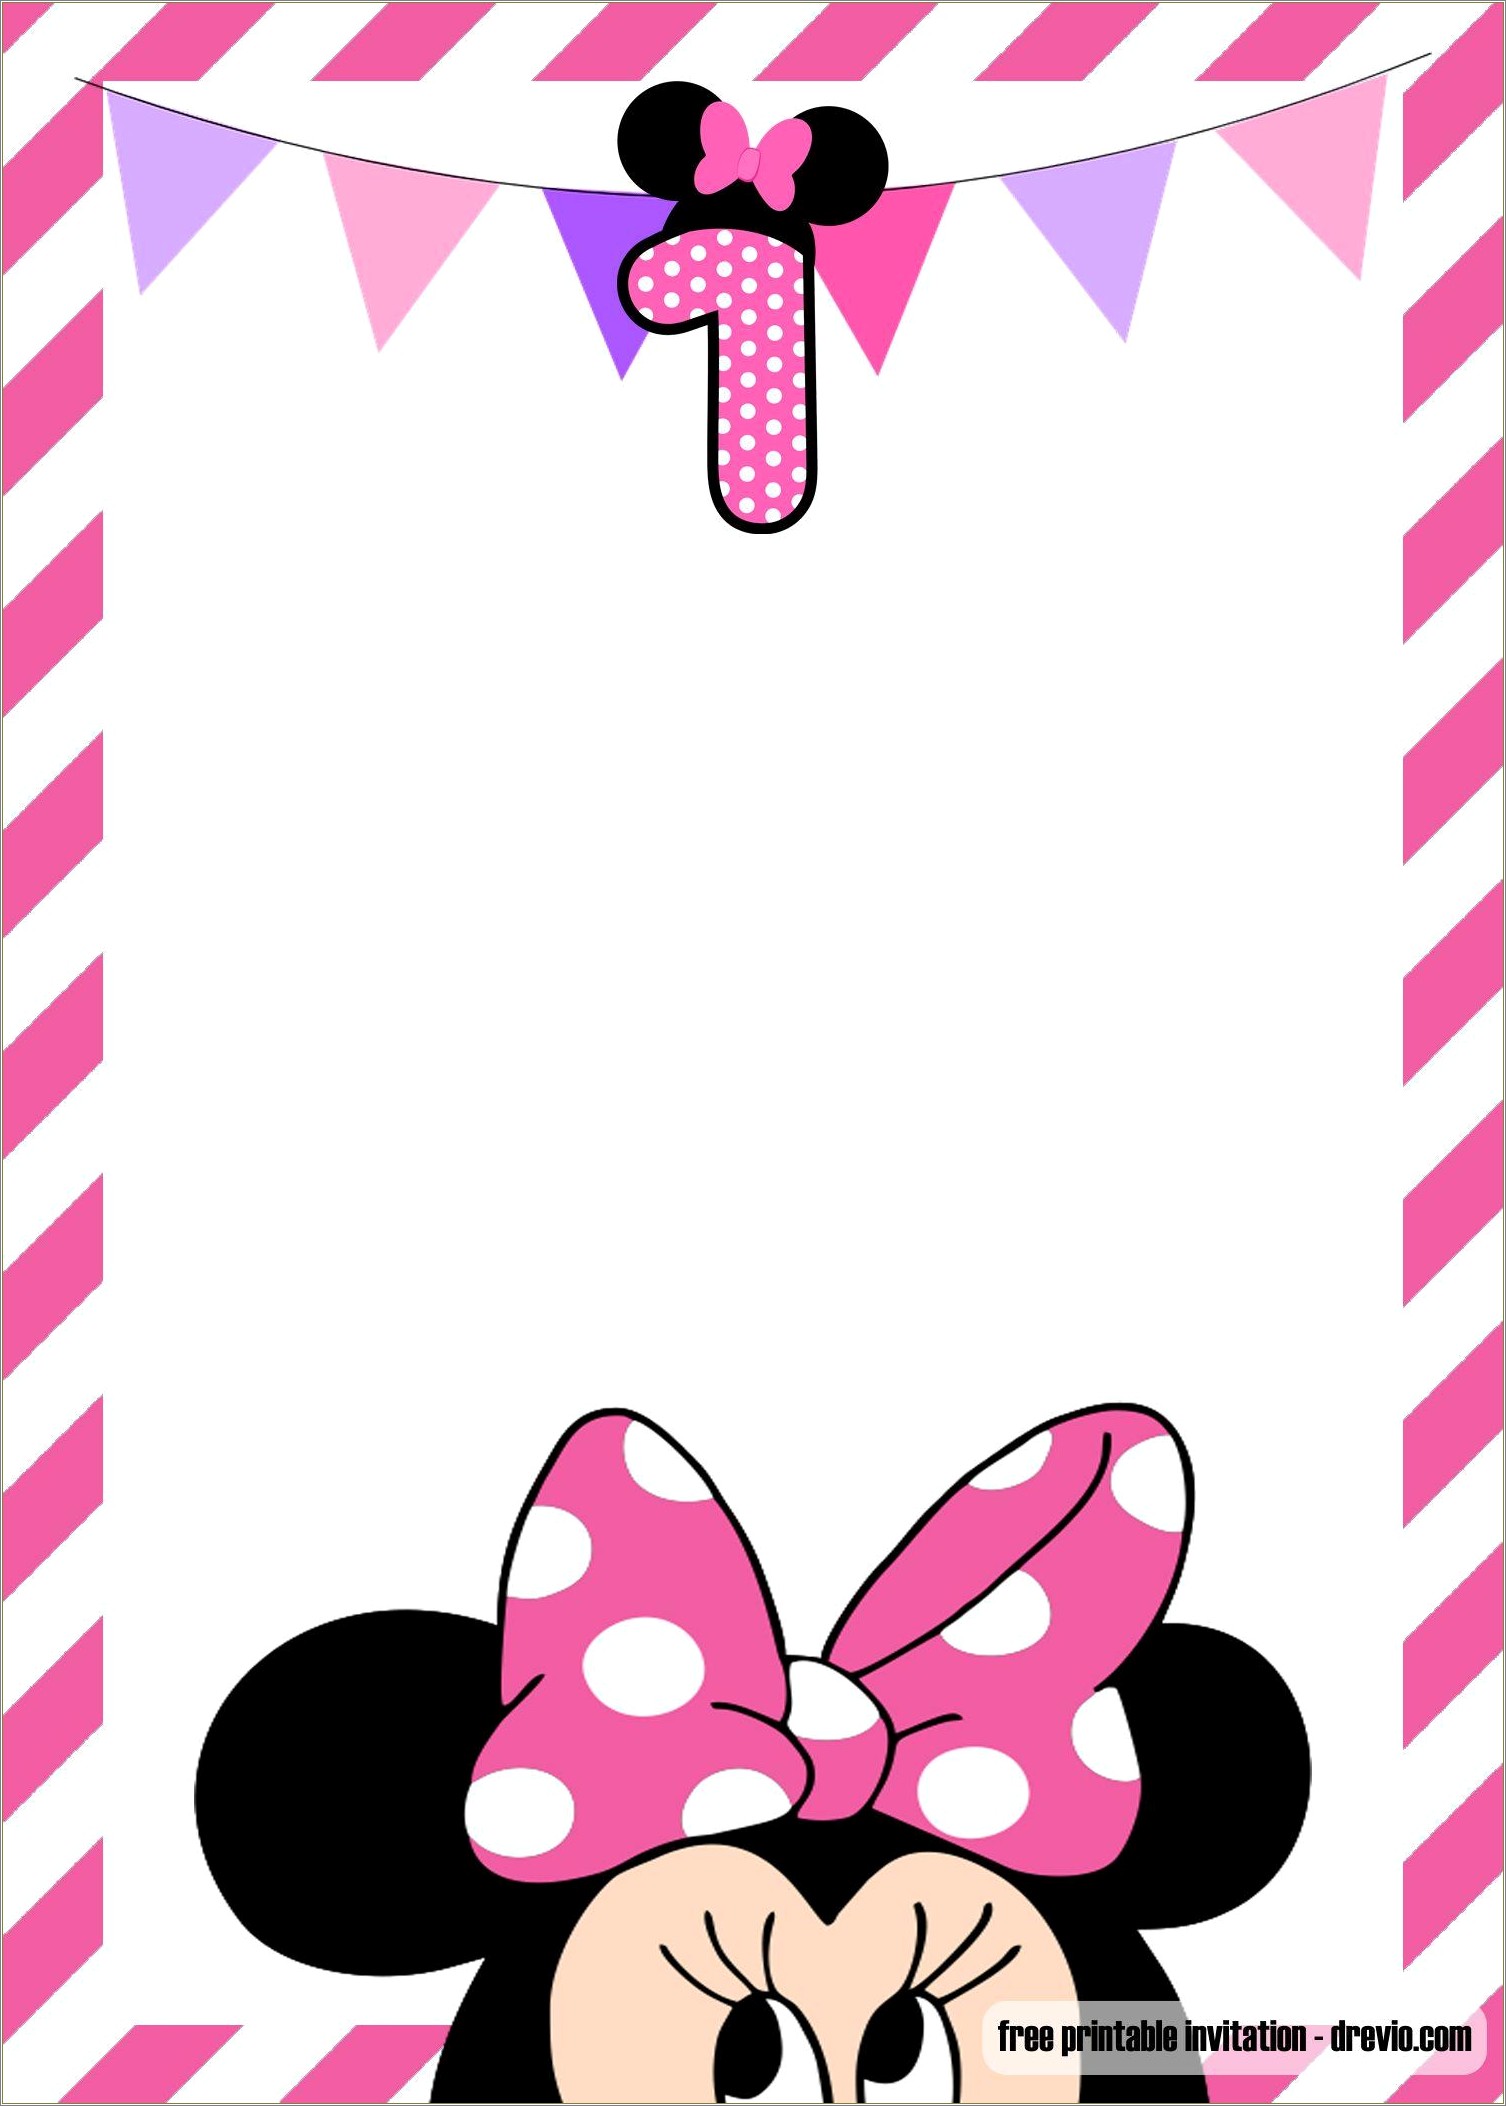 Minnie Mouse 1st Birthday Invitations Free Templates